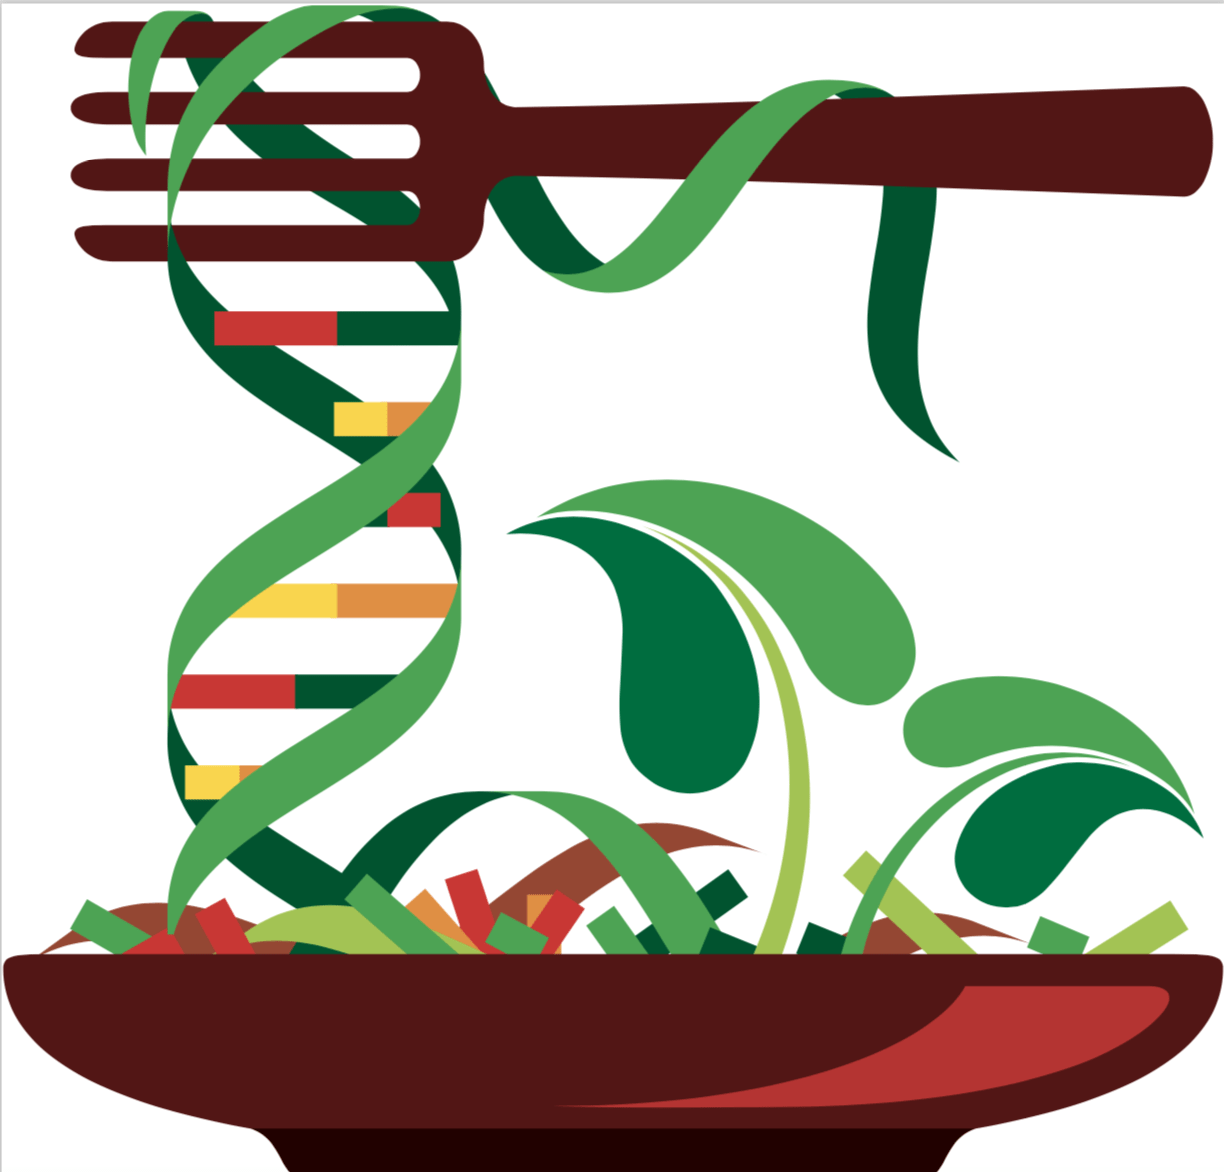 Nutrigenomica e nutrigenetica